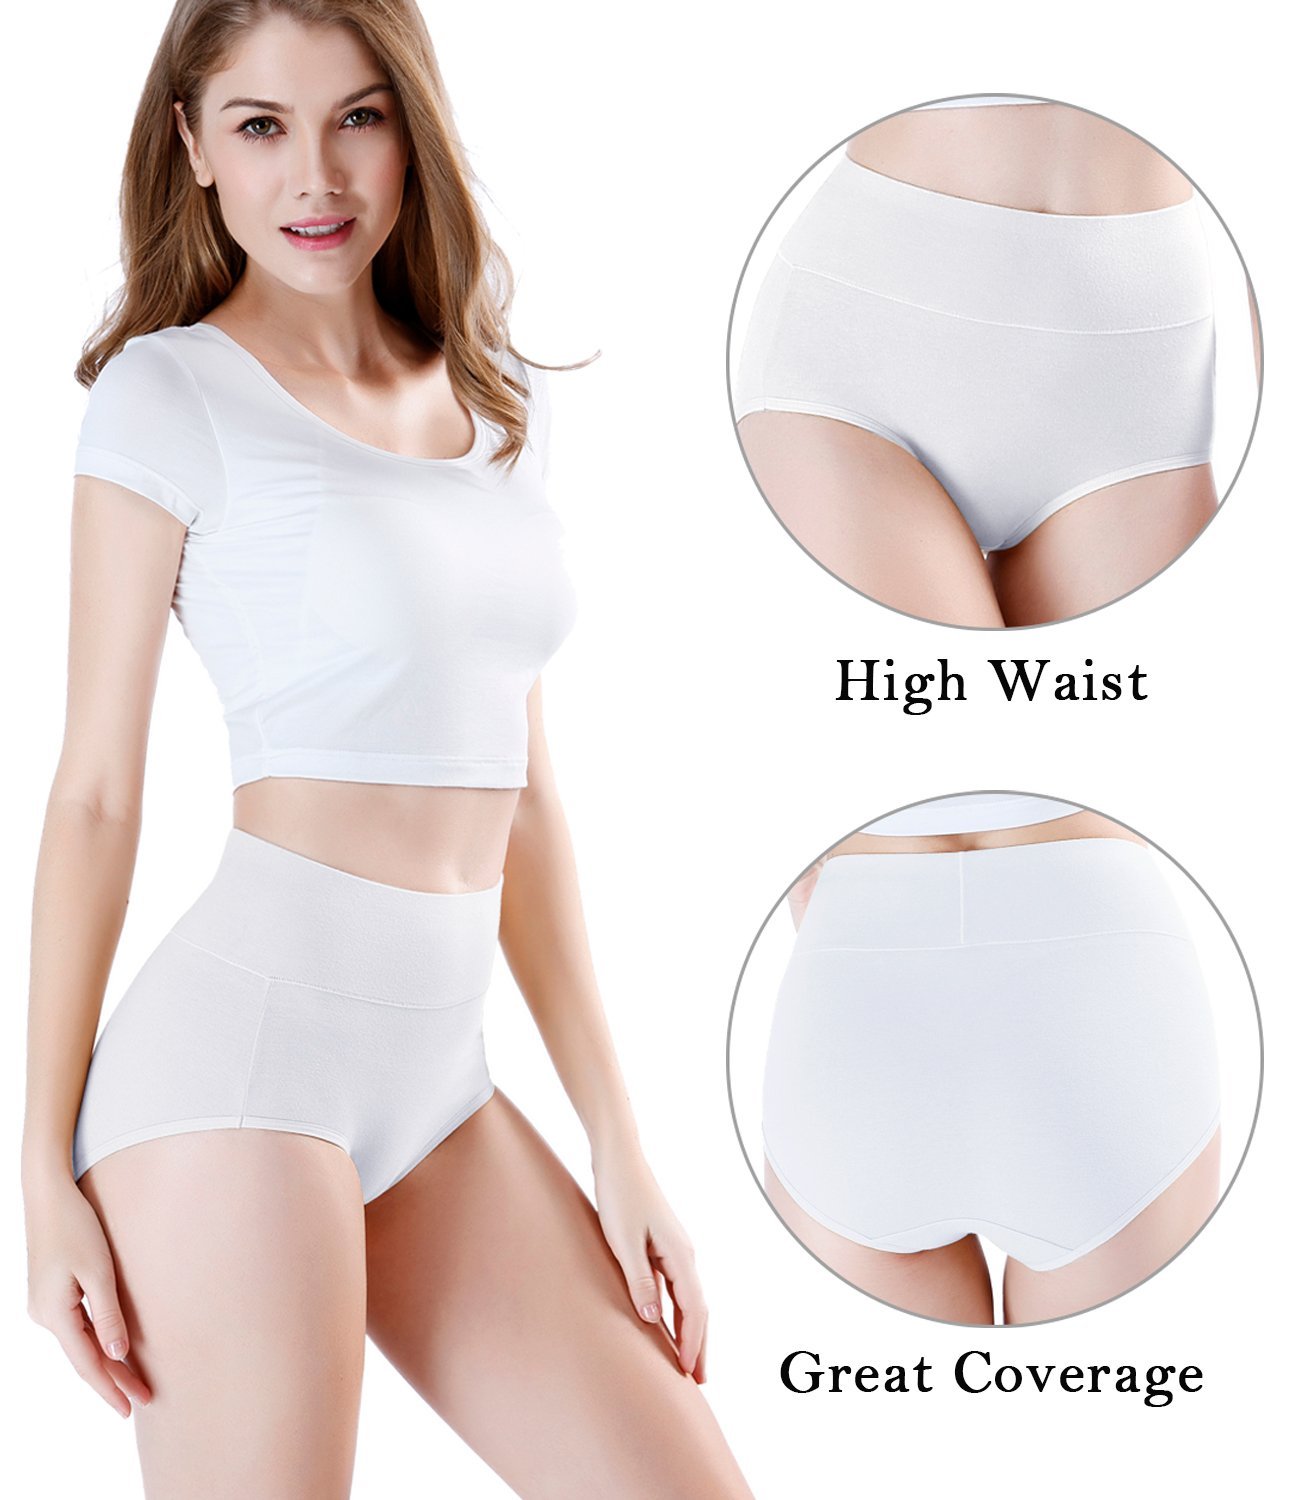 GetUSCart- wirarpa Womens Cotton Underwear Panties High Waisted Full Briefs  Ladies No Muffin Top Underpants 4 Pack White Size 6, Medium